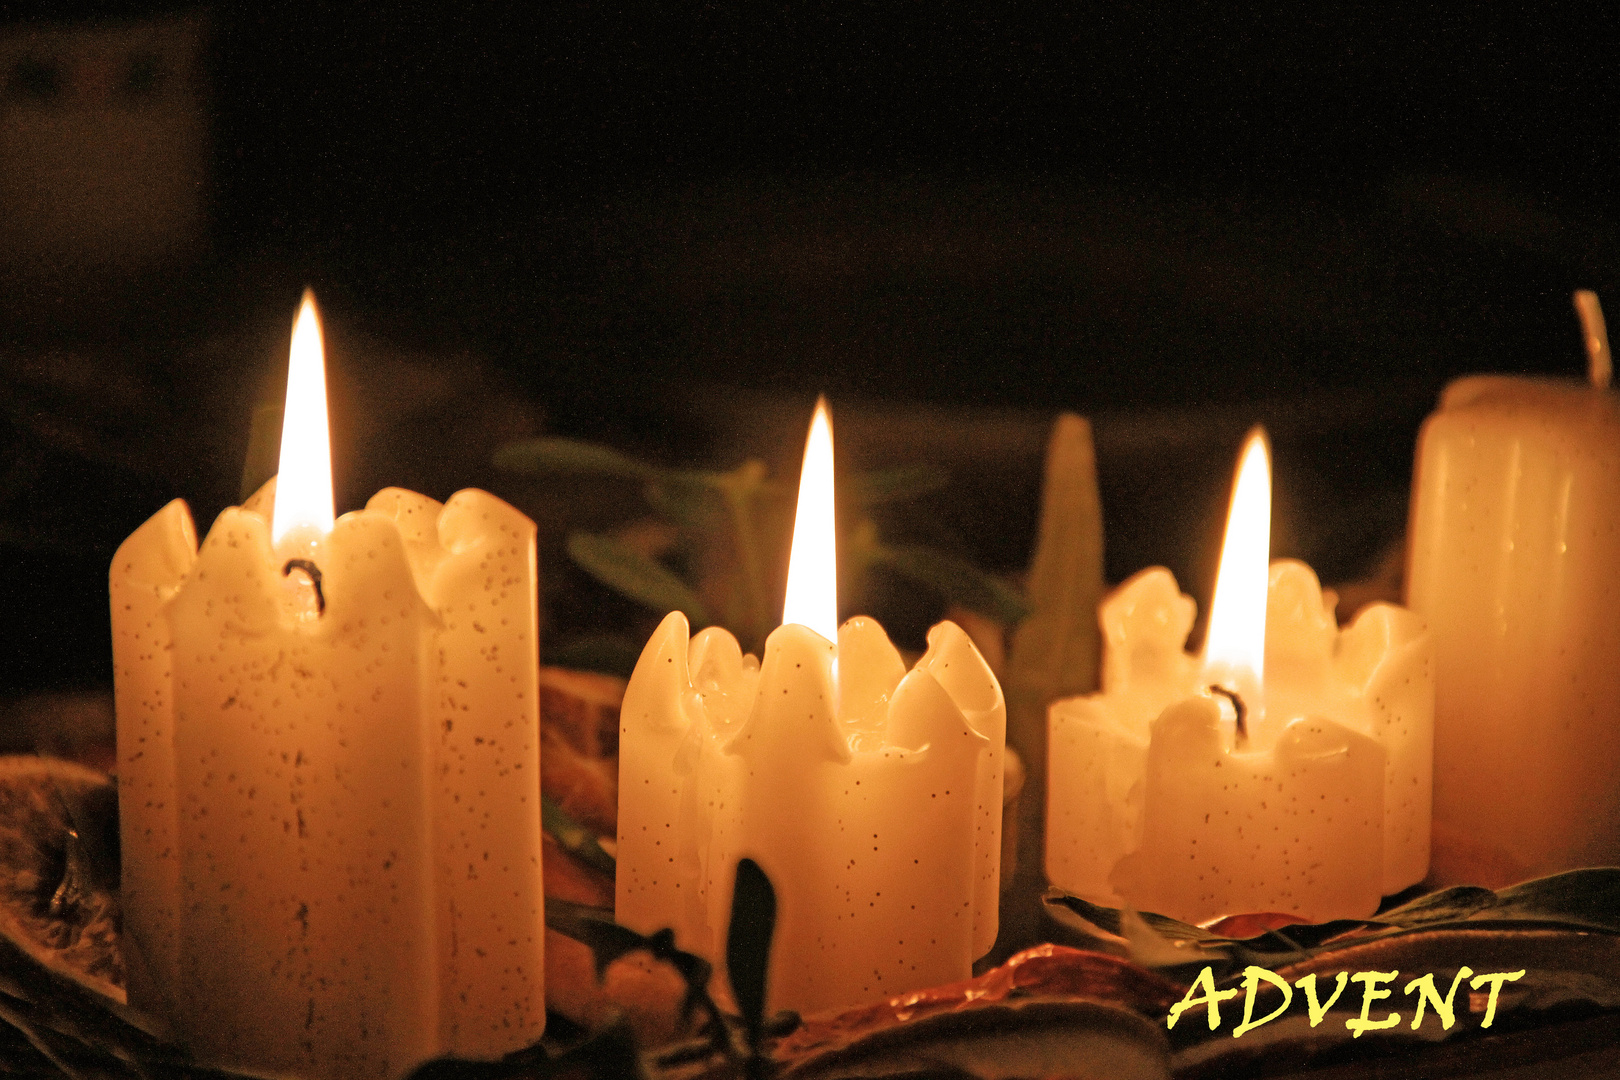 Kerzen im Advent 01